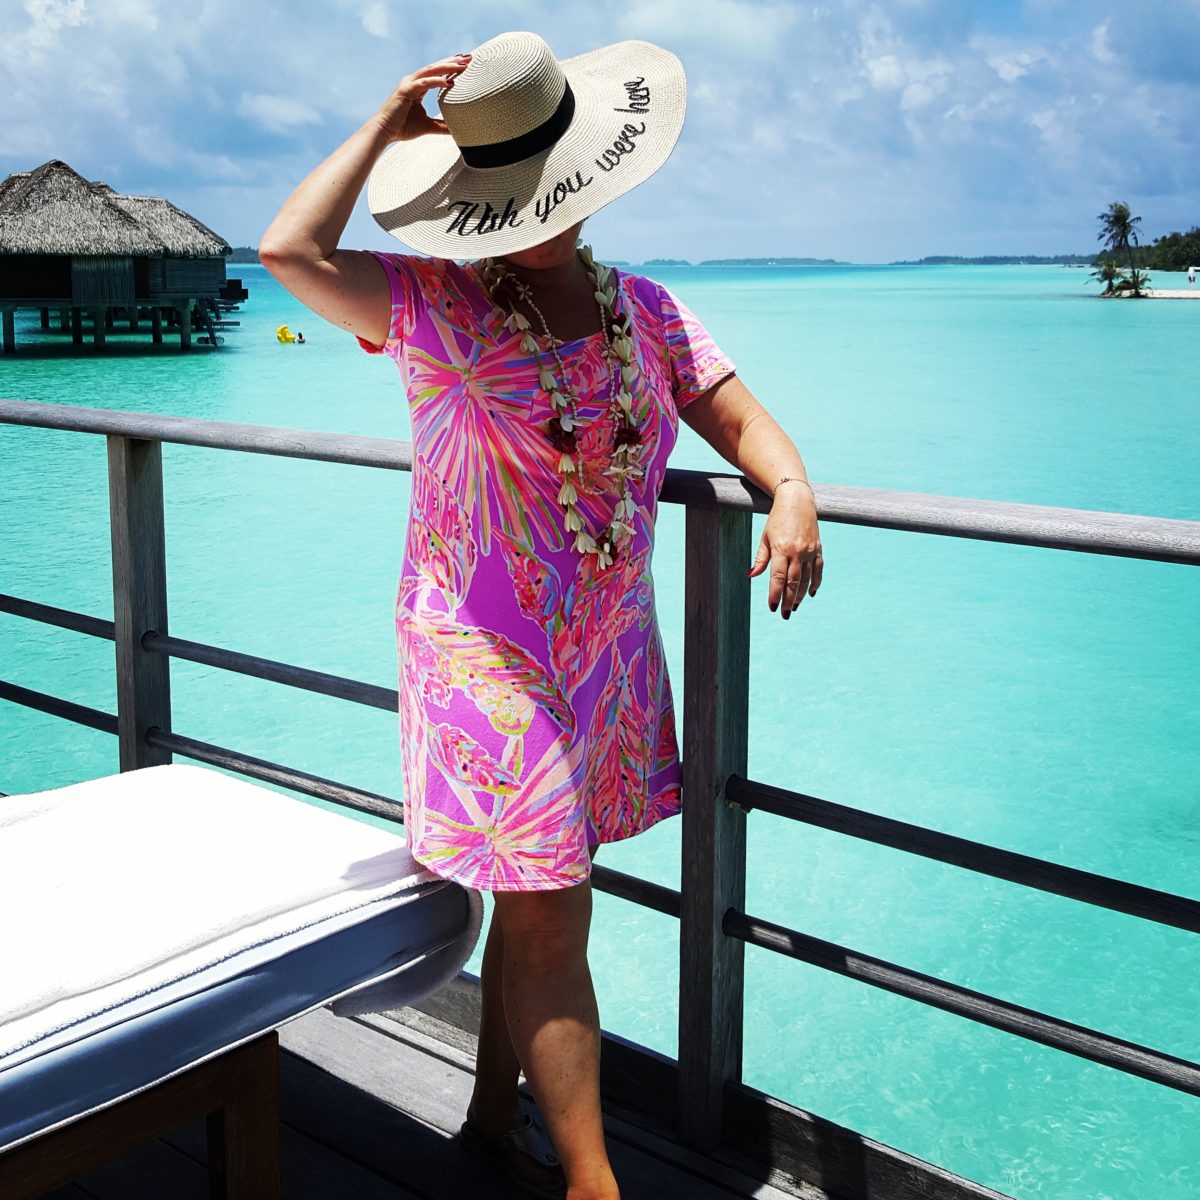 Lisa Berlin Luxury Travel agent specializing in Bora Bora